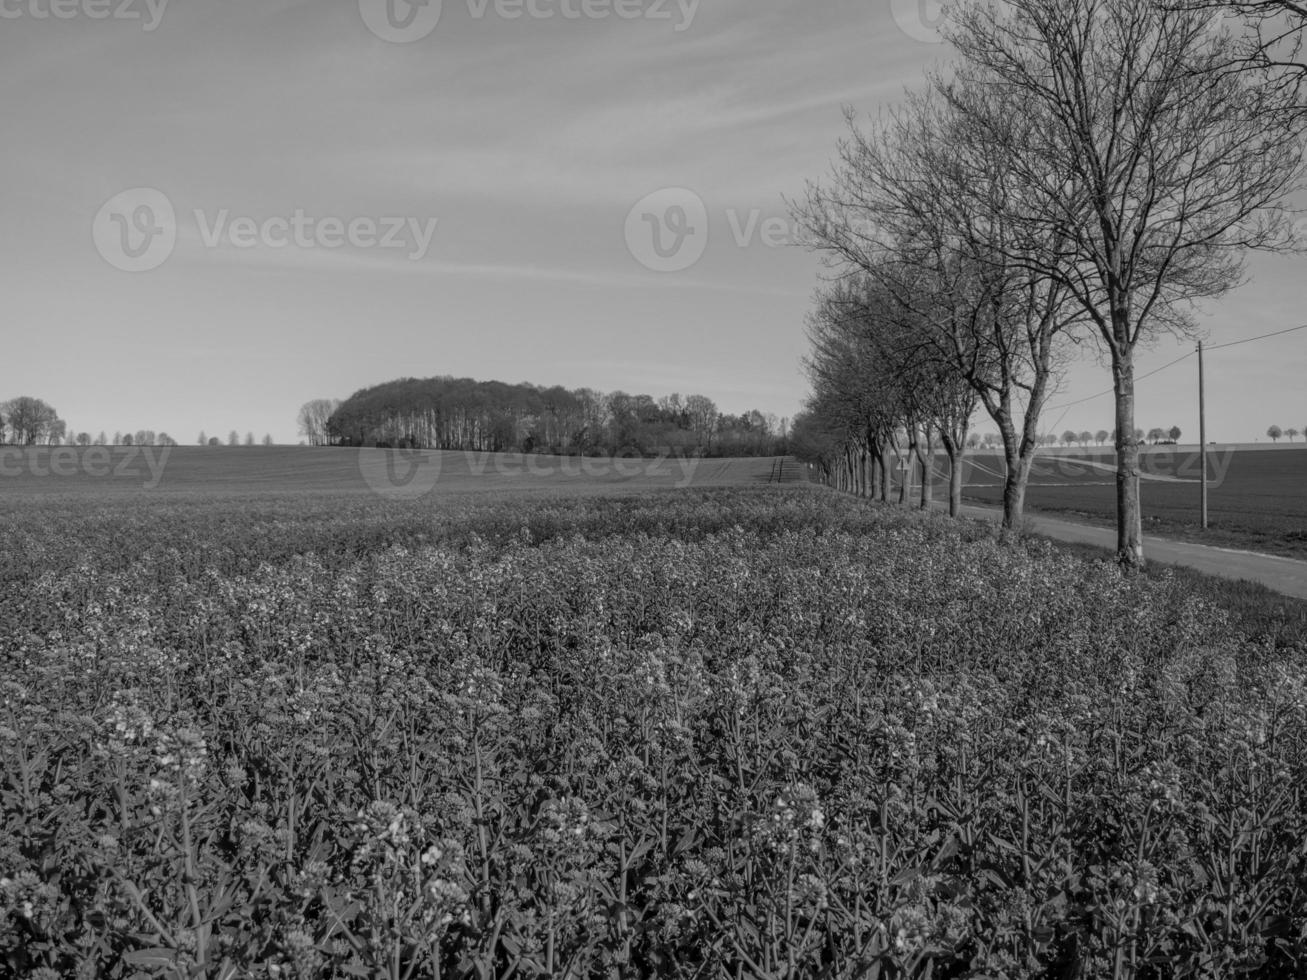 Westphalian landscape near Billerbeck photo